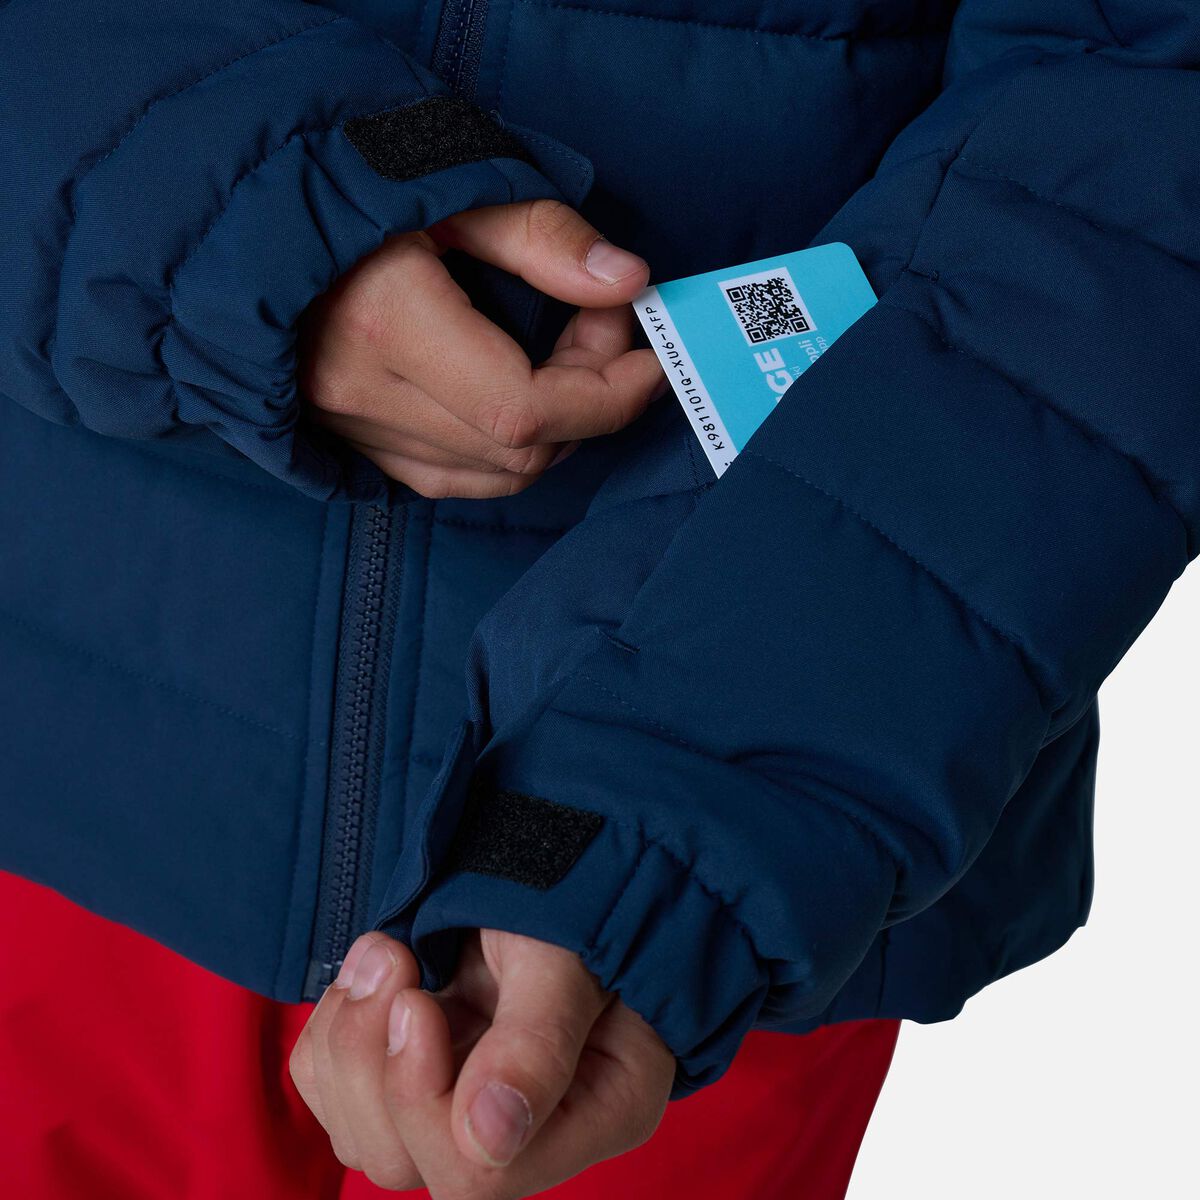 Rossignol Boys' Rapide Ski Jacket blue